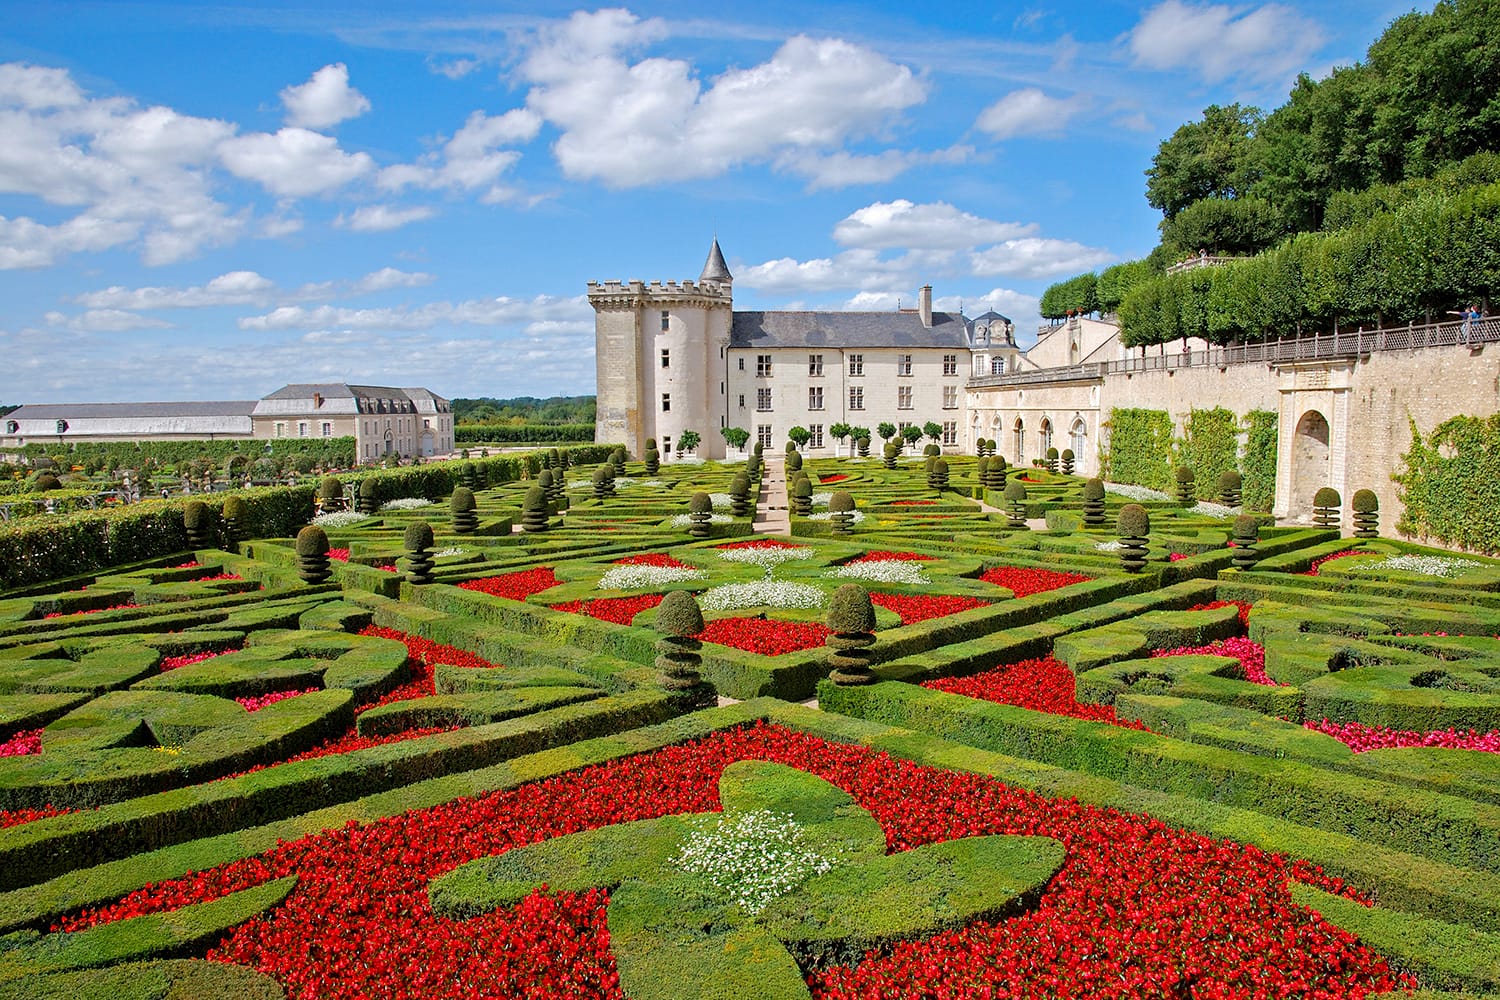 Chateau de Villandry in the Loire Valley, France